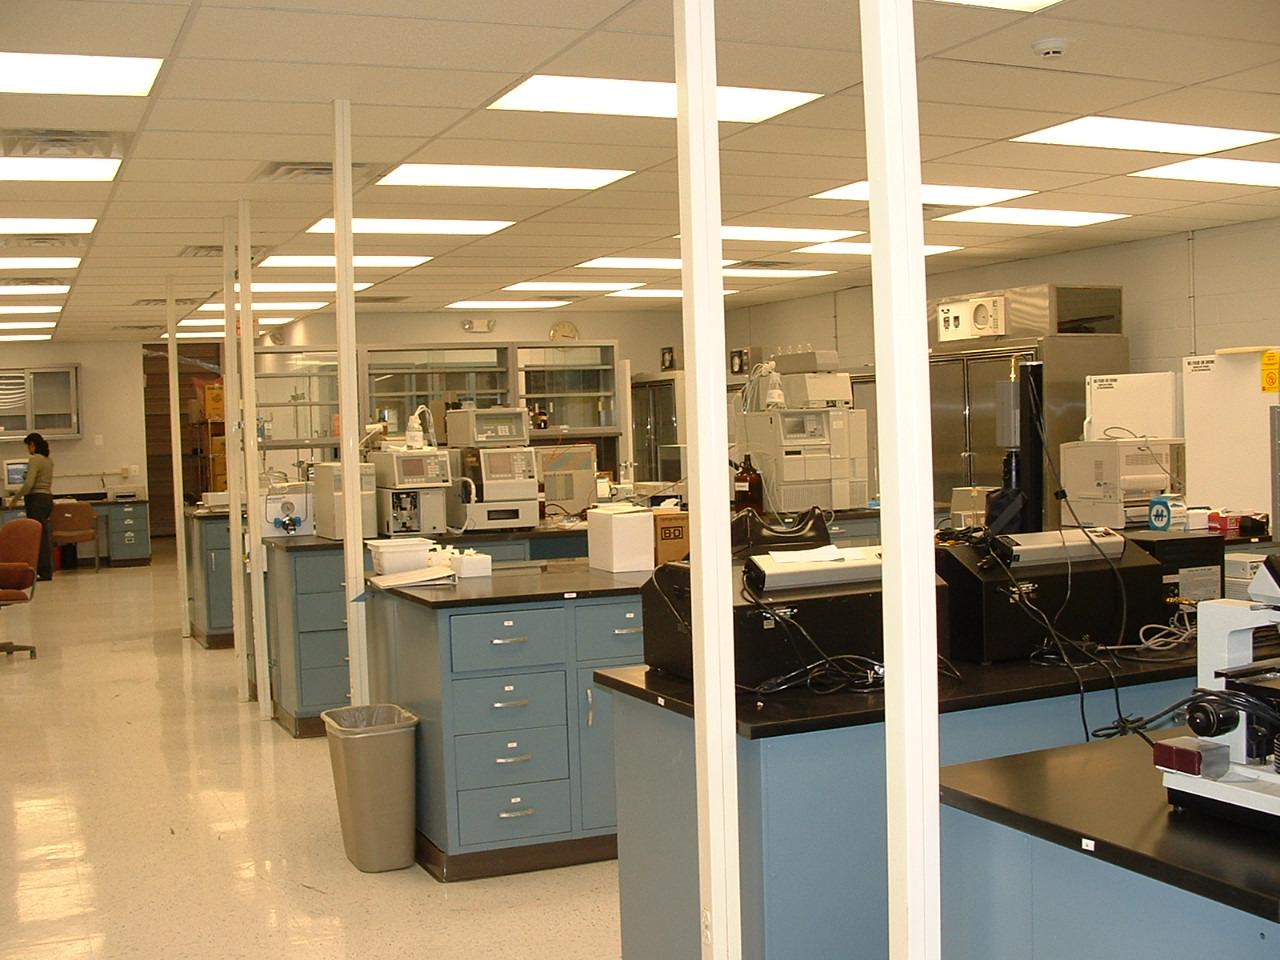 Testing facilities